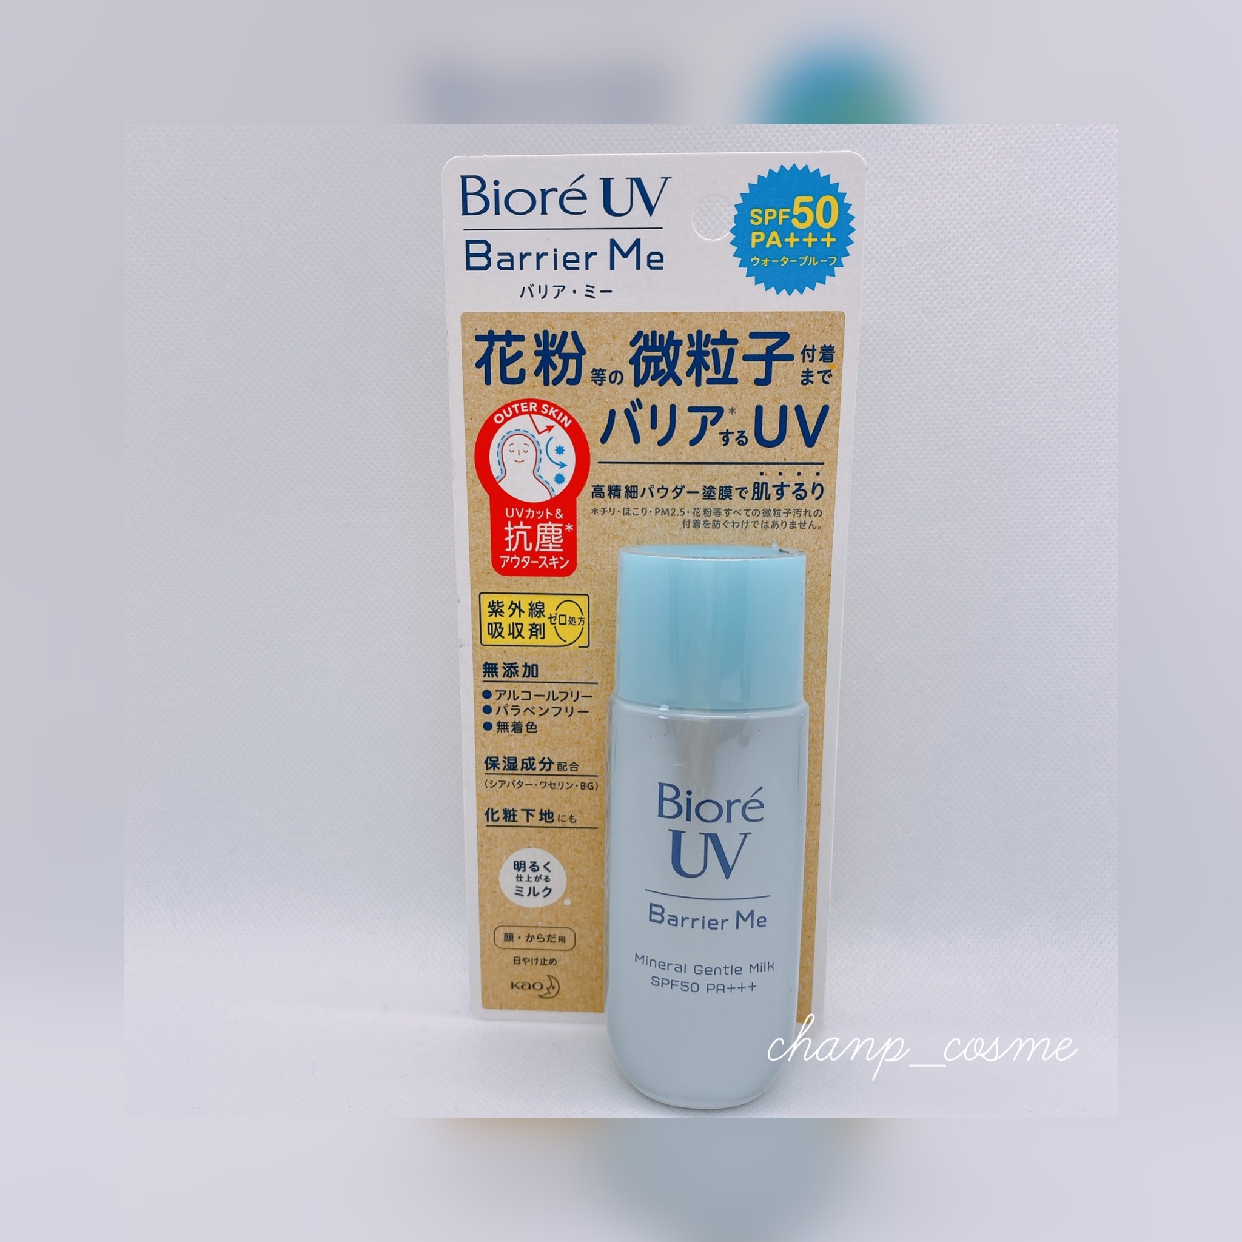 Bioré(ビオレ) UV バリア・ミー ミネラルジェントルミルクの良い点・メリットに関するちゃんぴさんの口コミ画像1